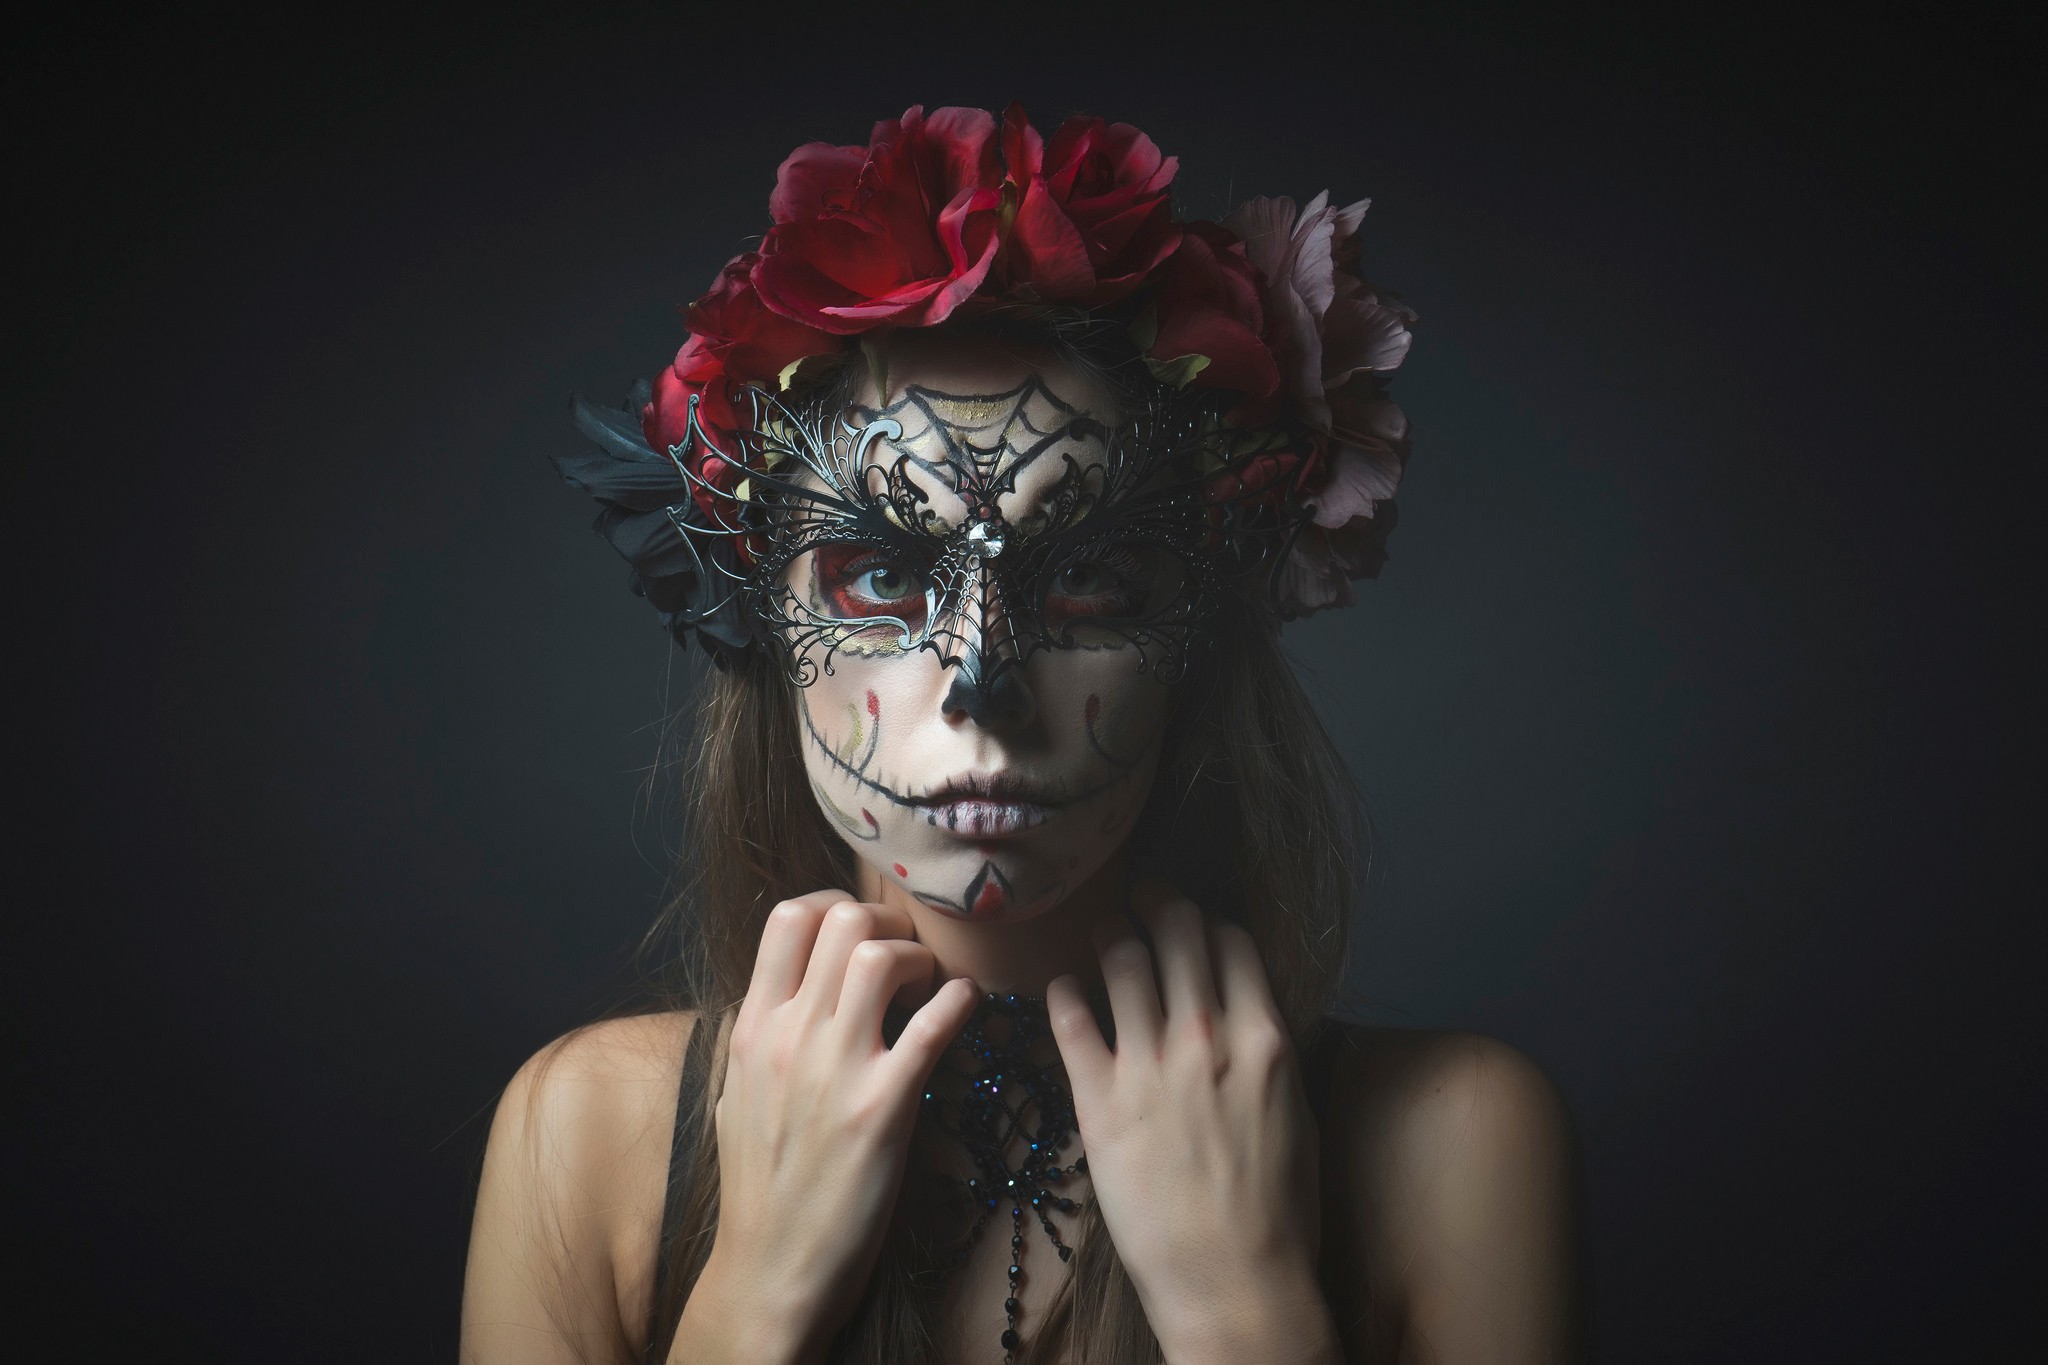 People 2048x1365 face paint Sugar Skull mask skull Dia de los Muertos women model face fantasy girl looking at viewer makeup flower crown simple background